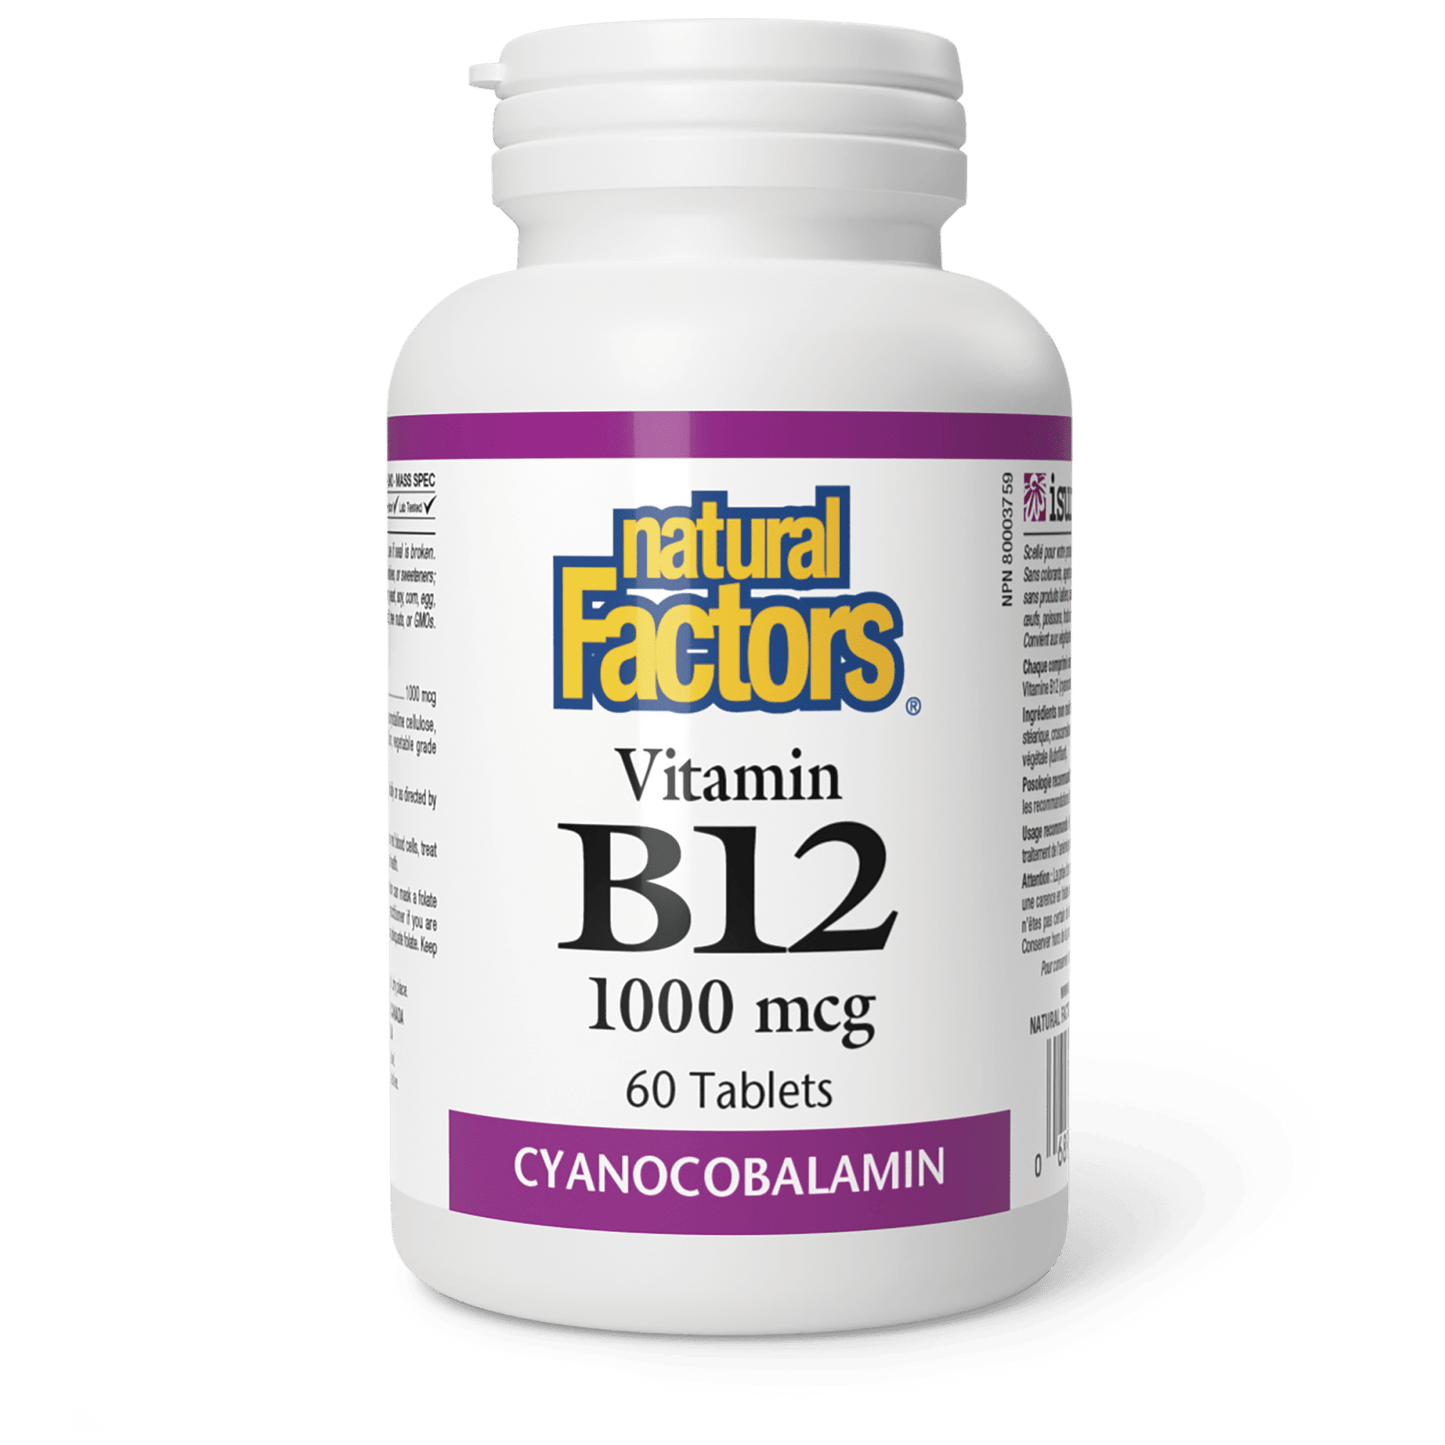 Vitamin B12 1000 mcg, Natural Factors|v|image|1245